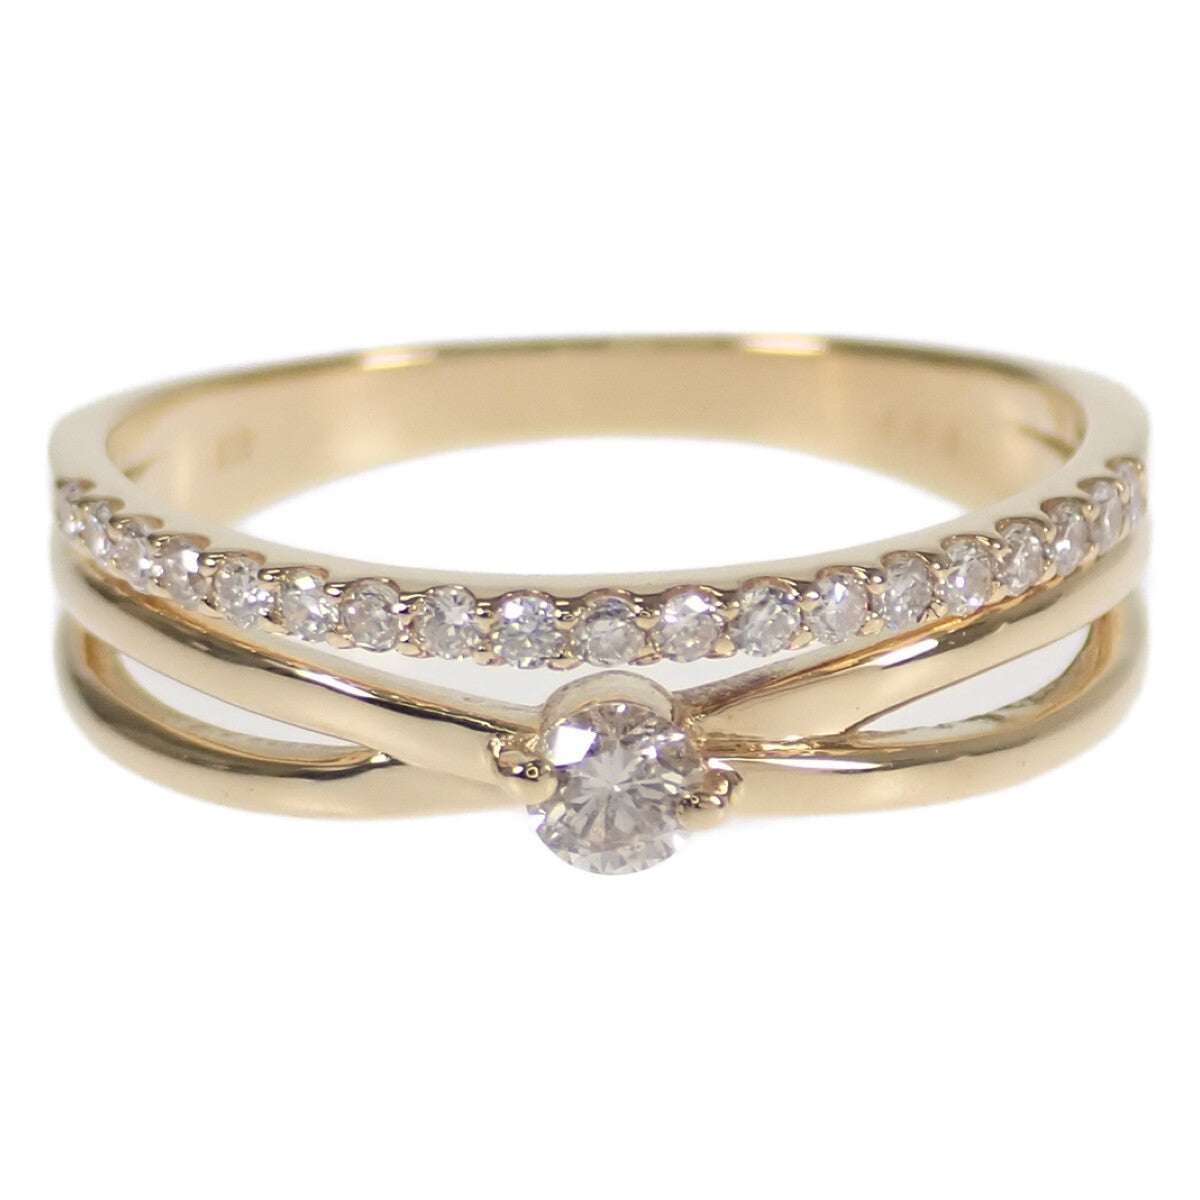 Graceful Design K18YG 0.20ct Diamond Ring Set in K18 Yellow Gold, Women's Size 11 in Gold